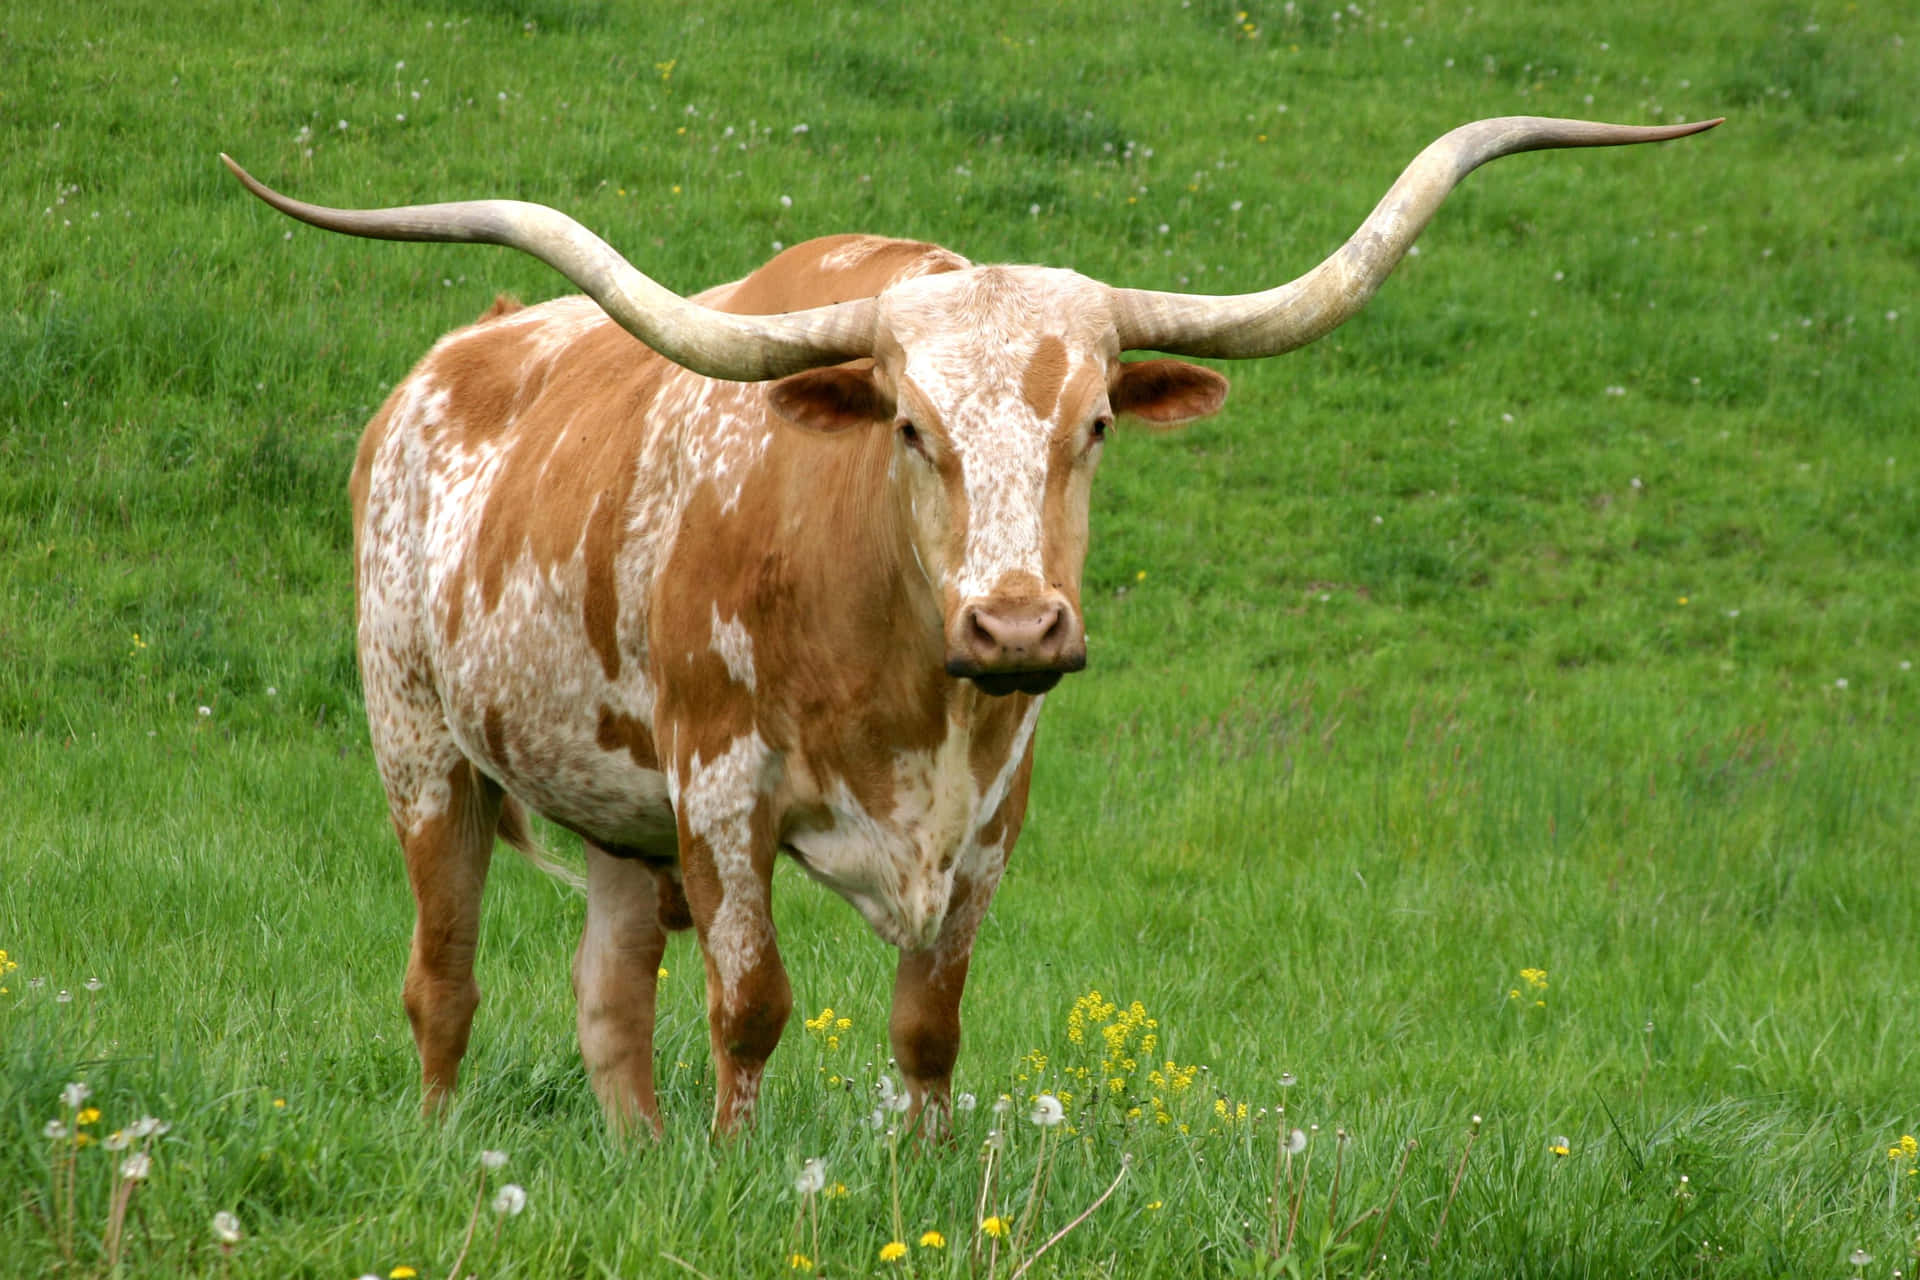 A majestic Ox overlooking a farmland